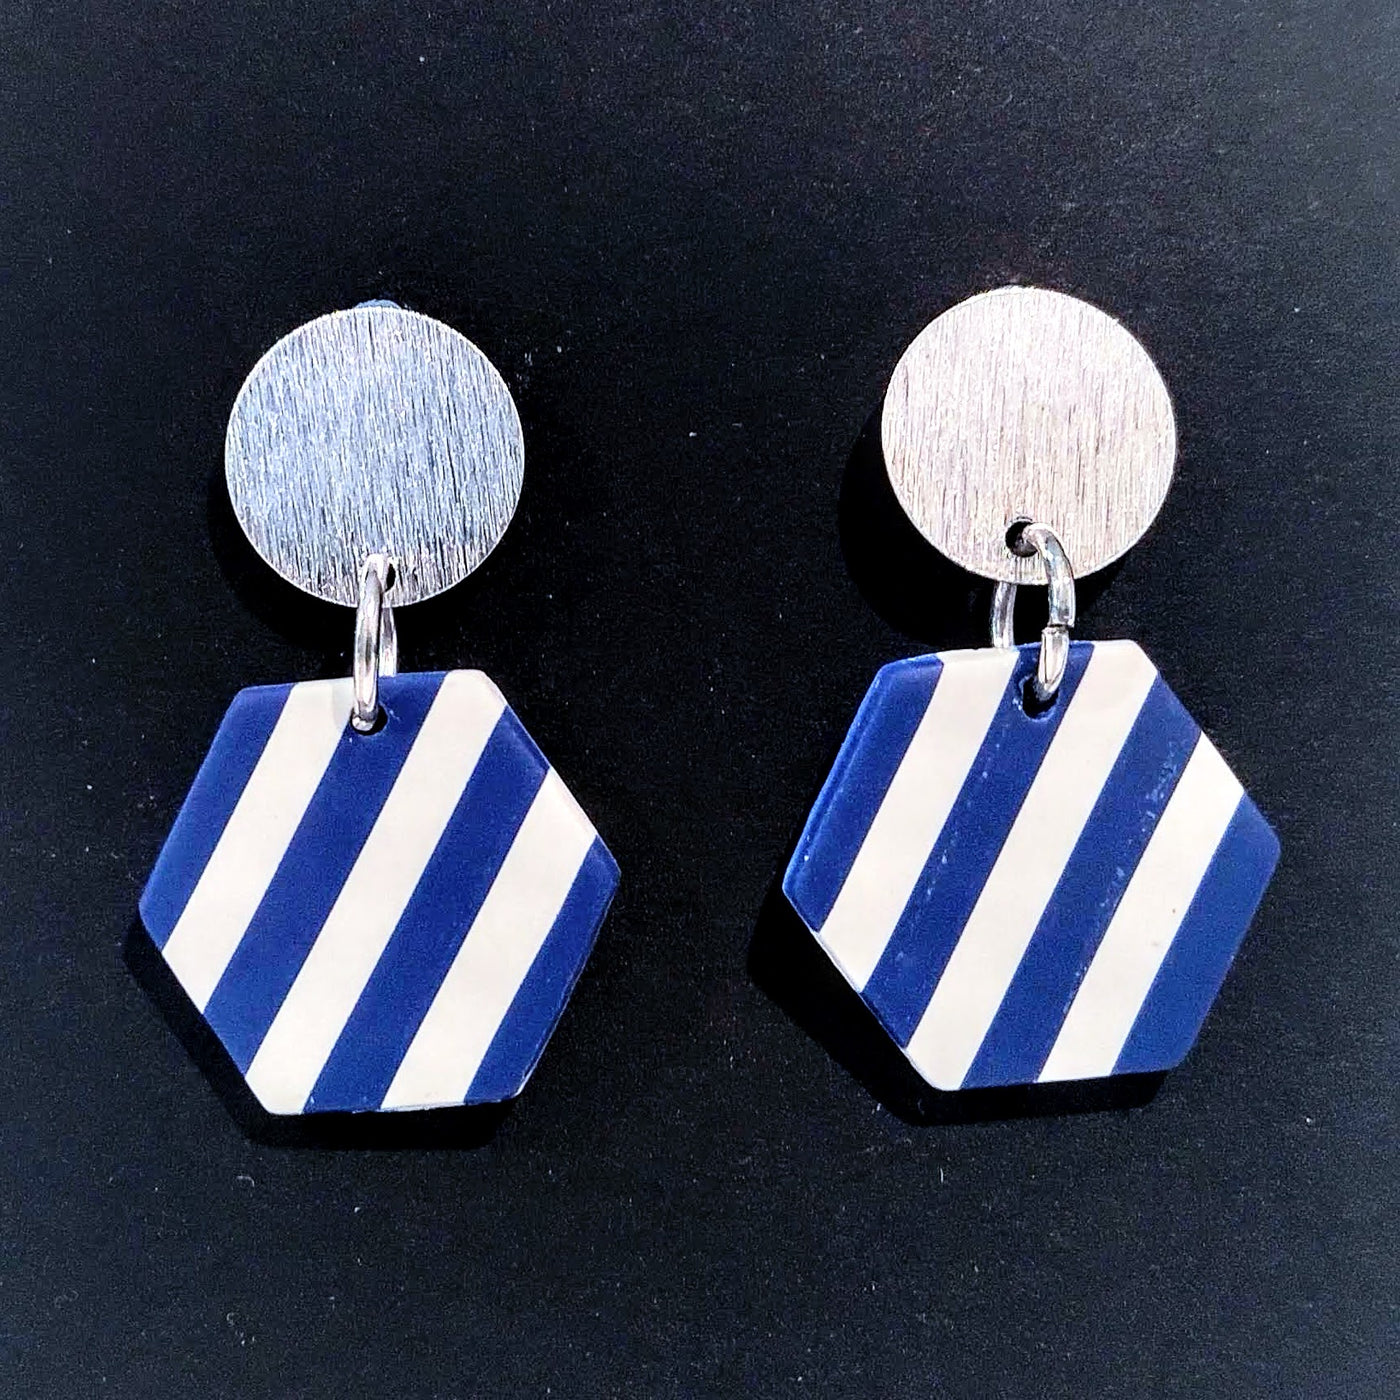 LA-006 Navy and White Striped Hexigon earrings